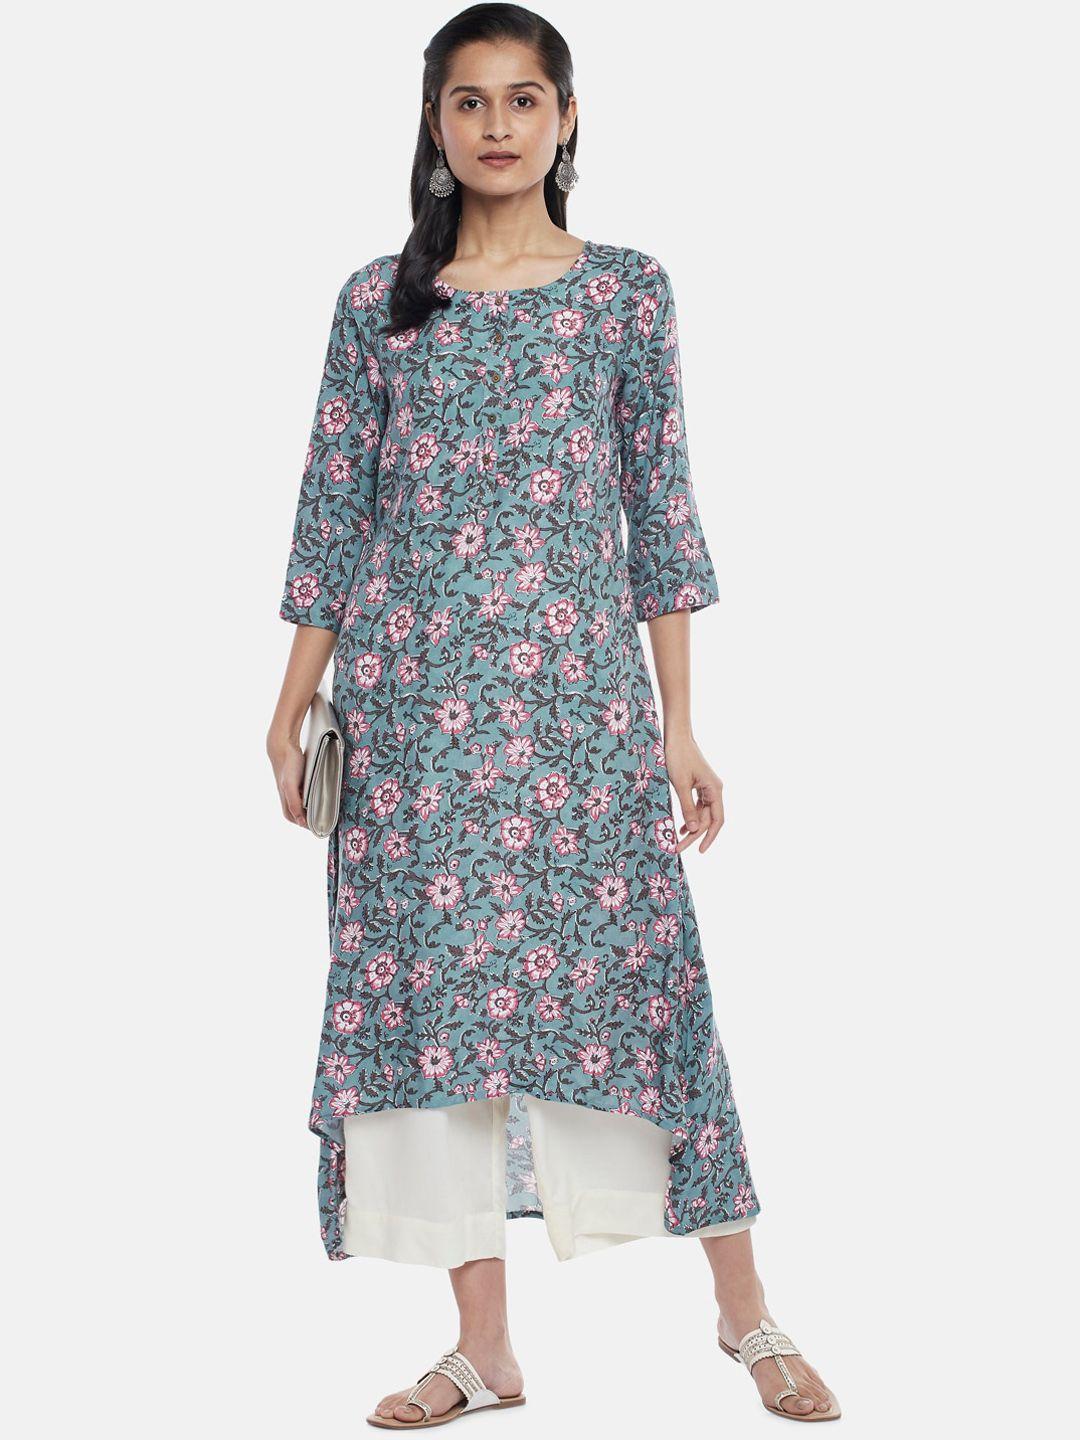 rangmanch by pantaloons women teal & pink floral printed kurta